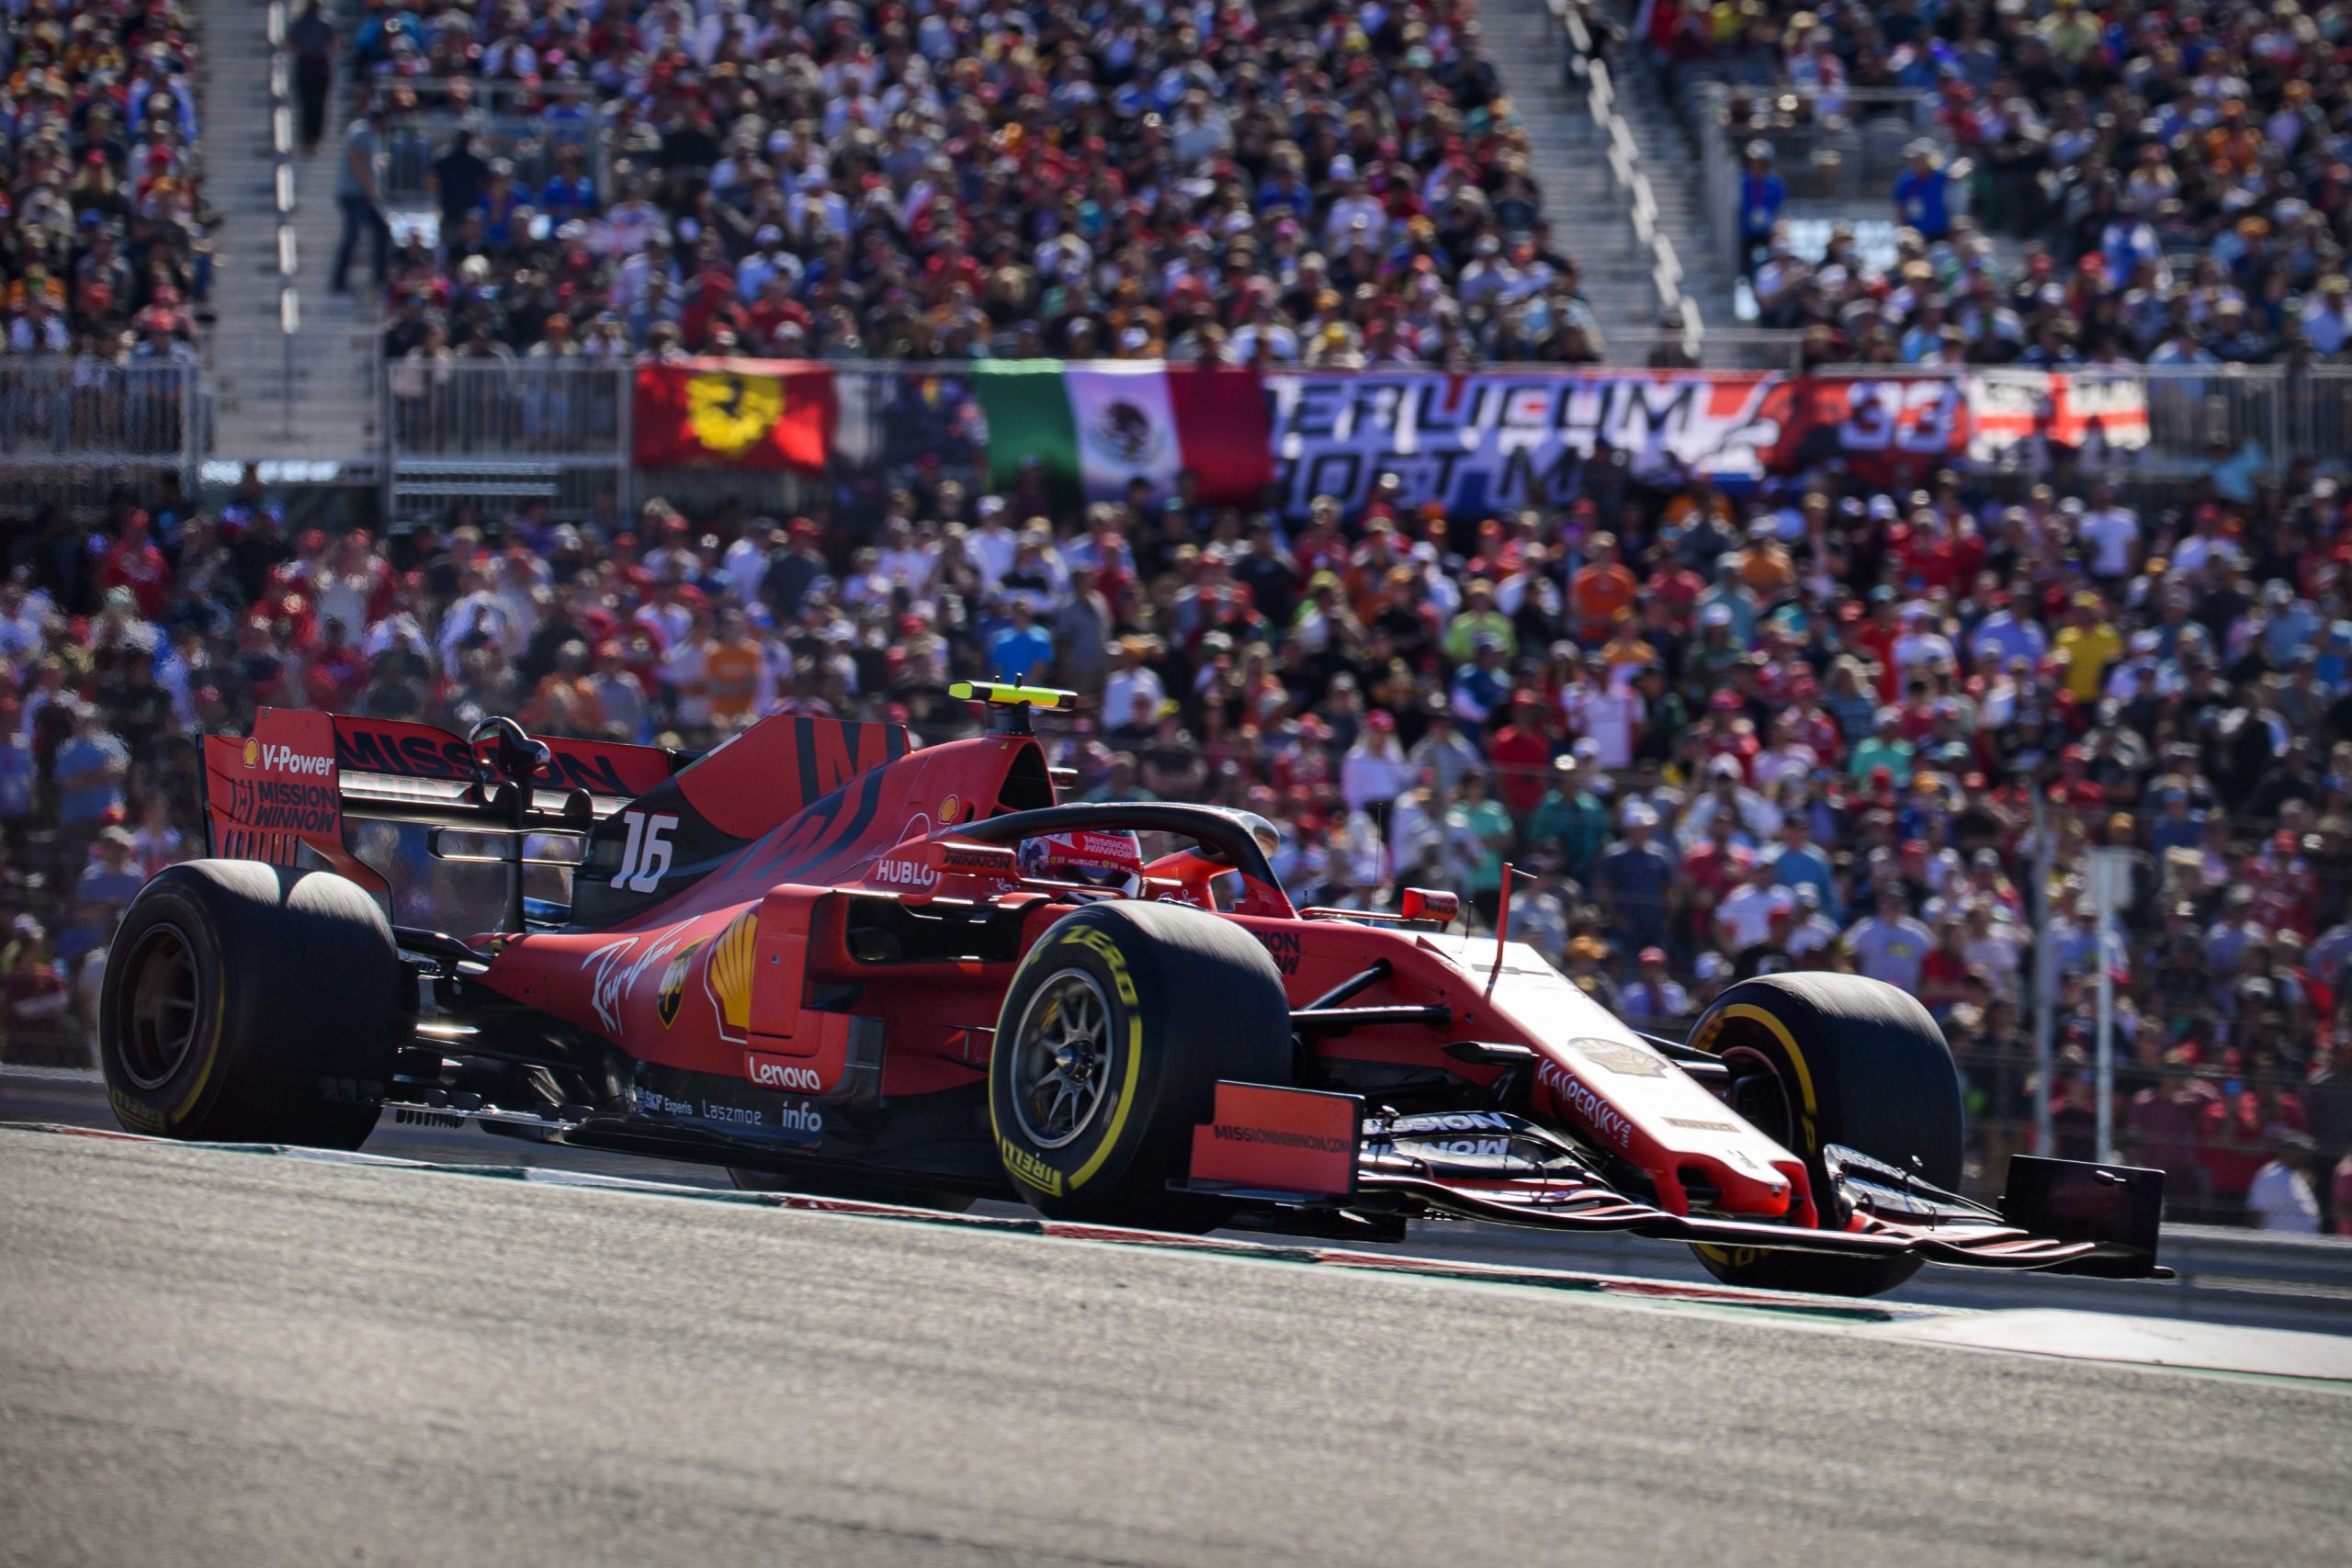 F1 Monaco Grand Prix Betting Odds, Top Storylines, Favorable Prop Bets